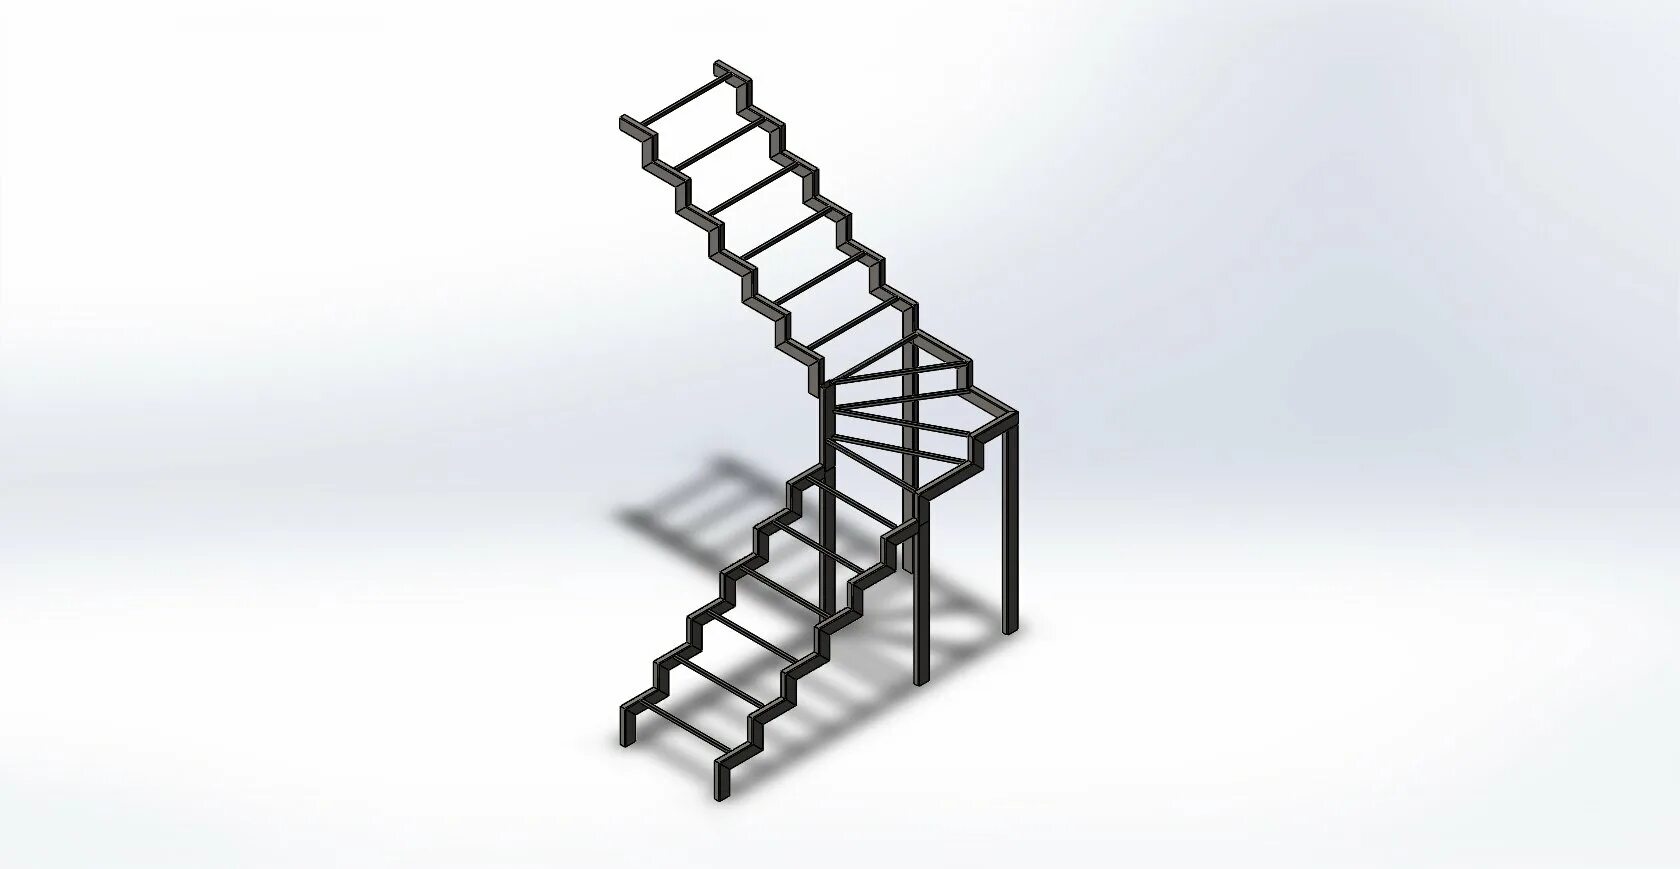 Лестница на металлокаркасе с забежными ступенями на 90 градусов. Лестница с забежными ступенями на 90 из металла. Металлическая лестница с забежными ступенями с поворотом на 90. Лестница с4 забежными ступенями на 90 градусов.